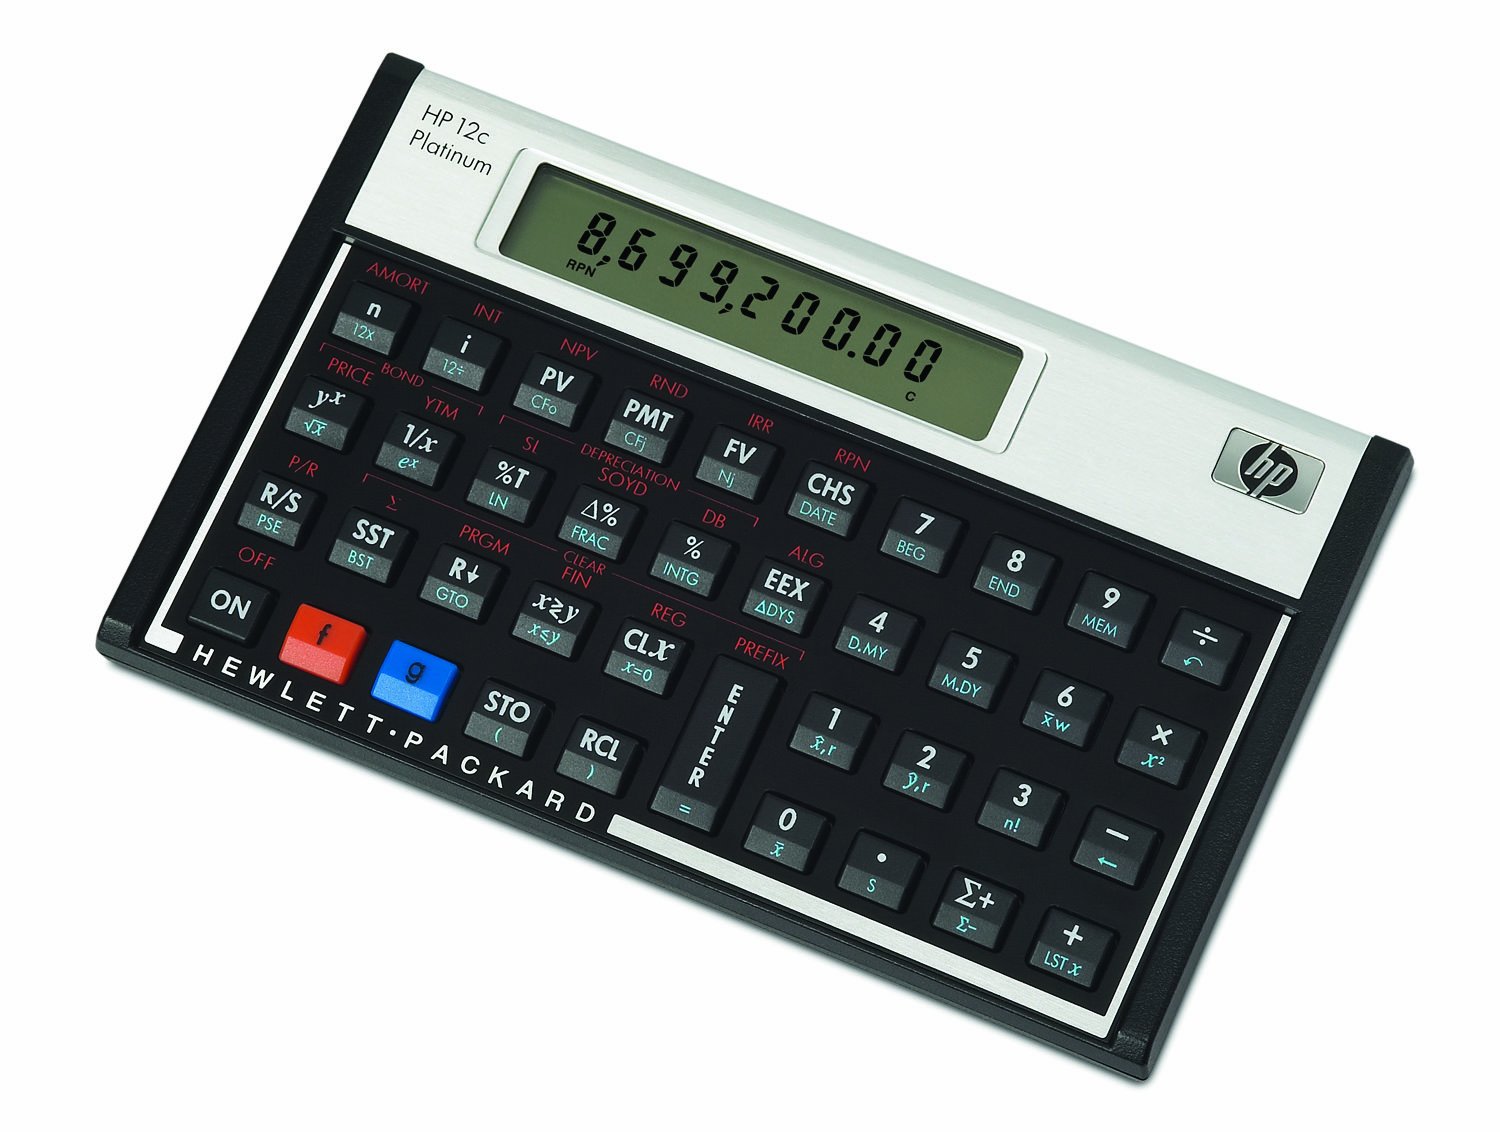 HP 12CP Financial Calculator